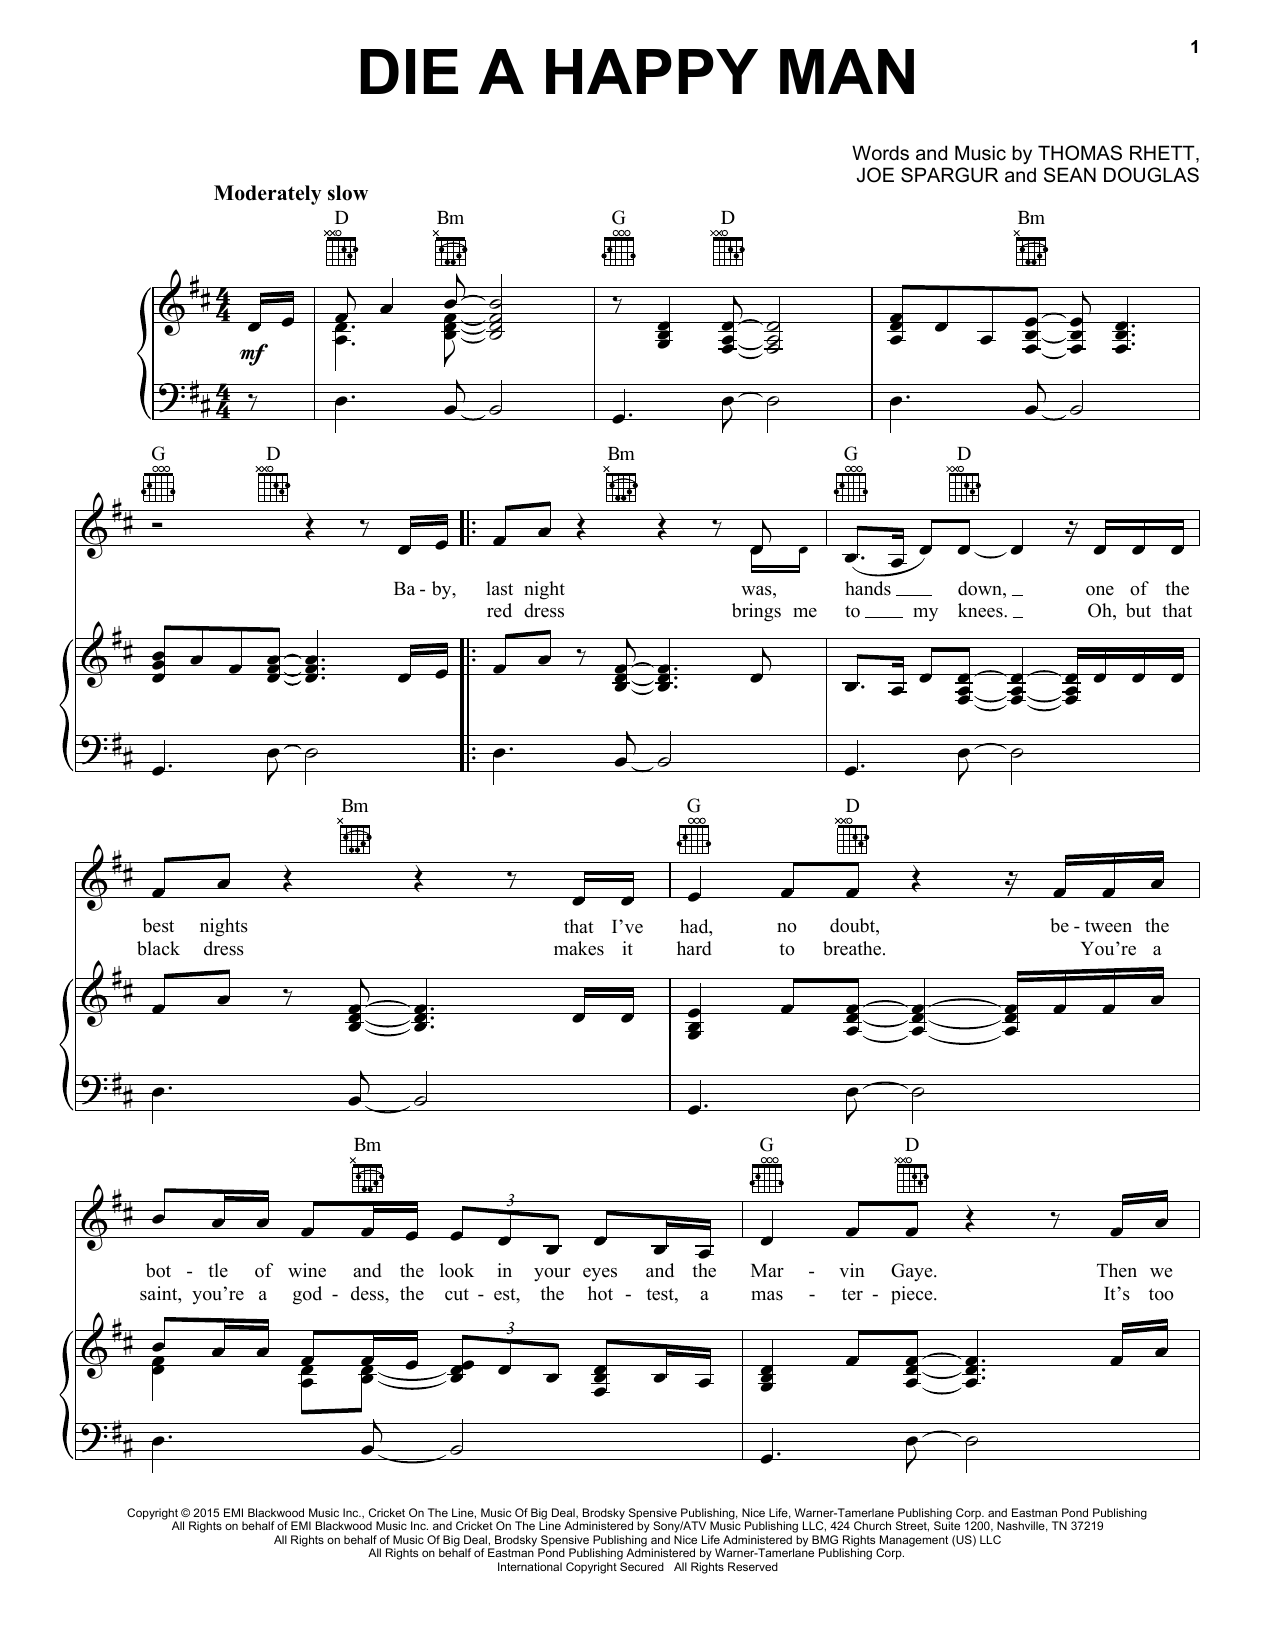 Thomas Rhett Die A Happy Man Sheet Music Notes & Chords for Viola - Download or Print PDF